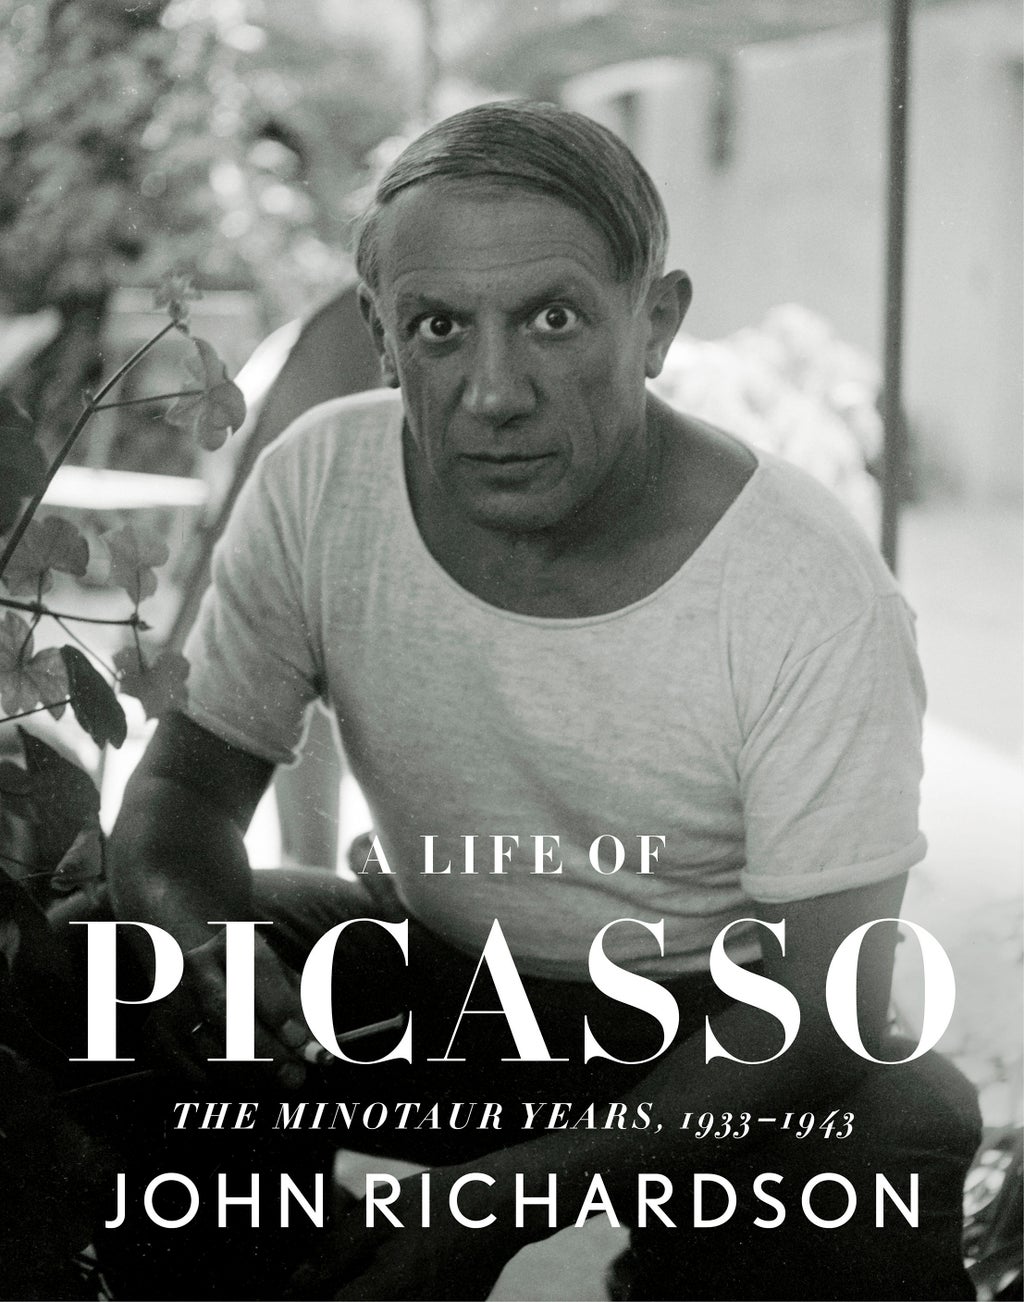 John Richardsons final Picasso book arrives in November